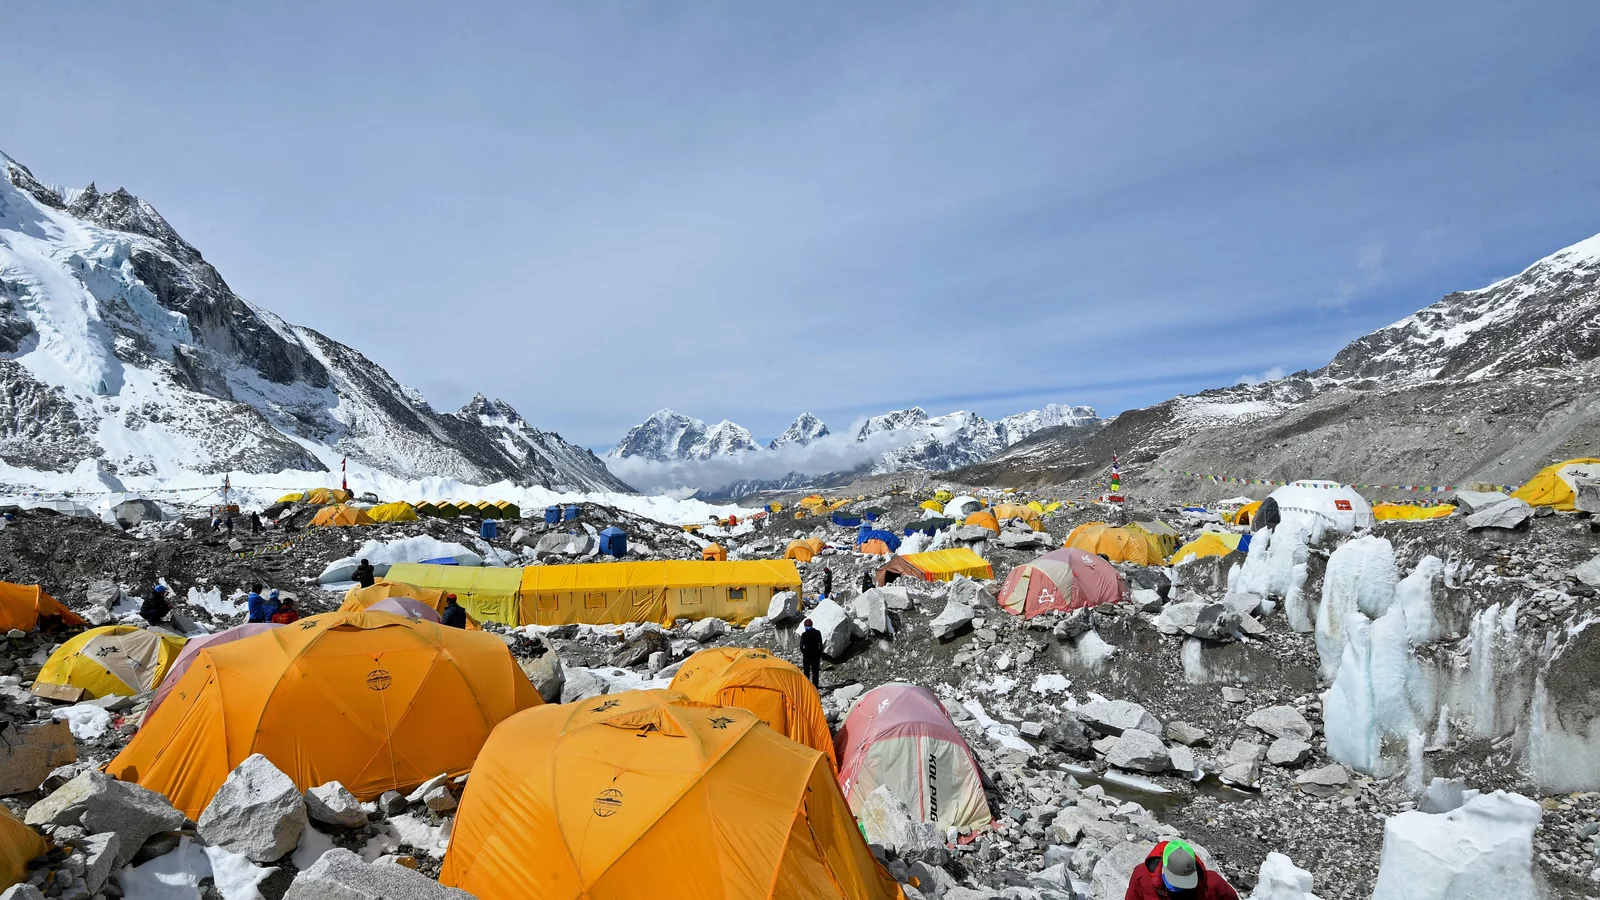 Covid Outbreak Threatens Mount Everest Climbing Comeback Plans Risking Nepal Tourism Again 30 Climbers Evacuated From Mount Everest After Covid Outbreak, Threatening Nepal's Tourism Again